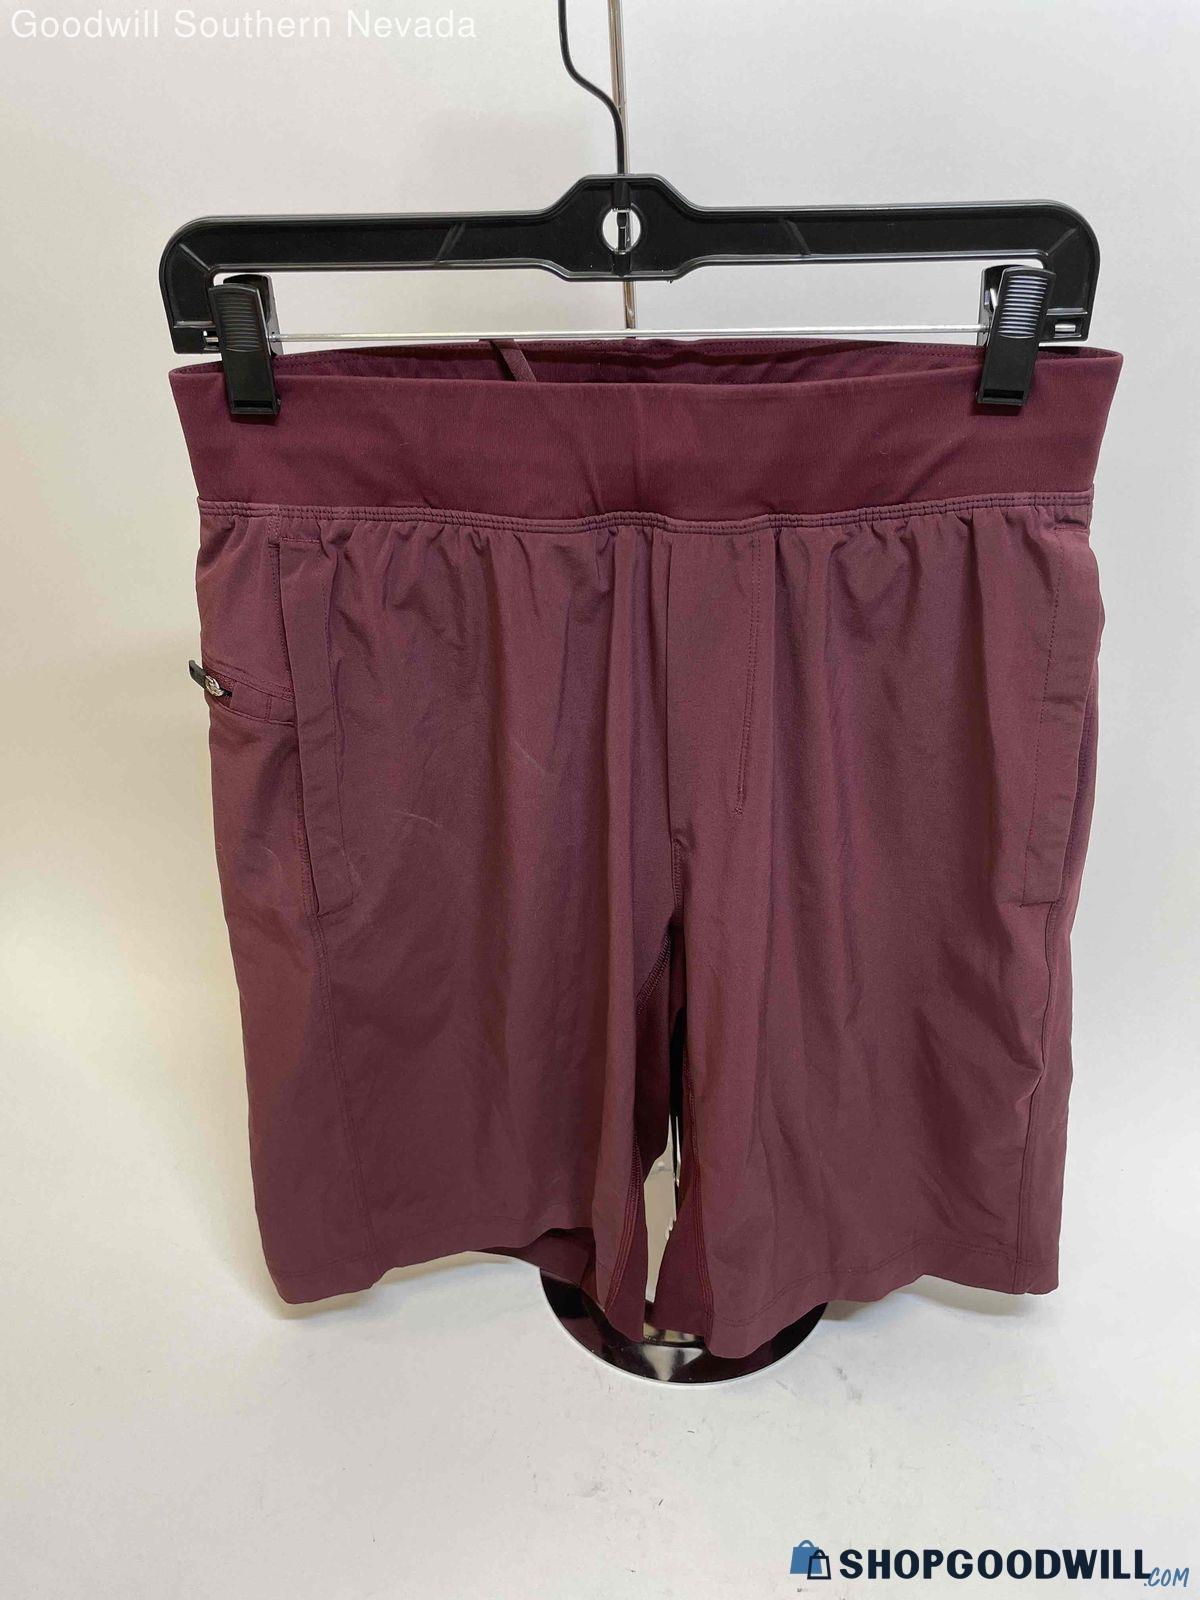 Lululemon Men's Maroon Shorts - Size M - shopgoodwill.com